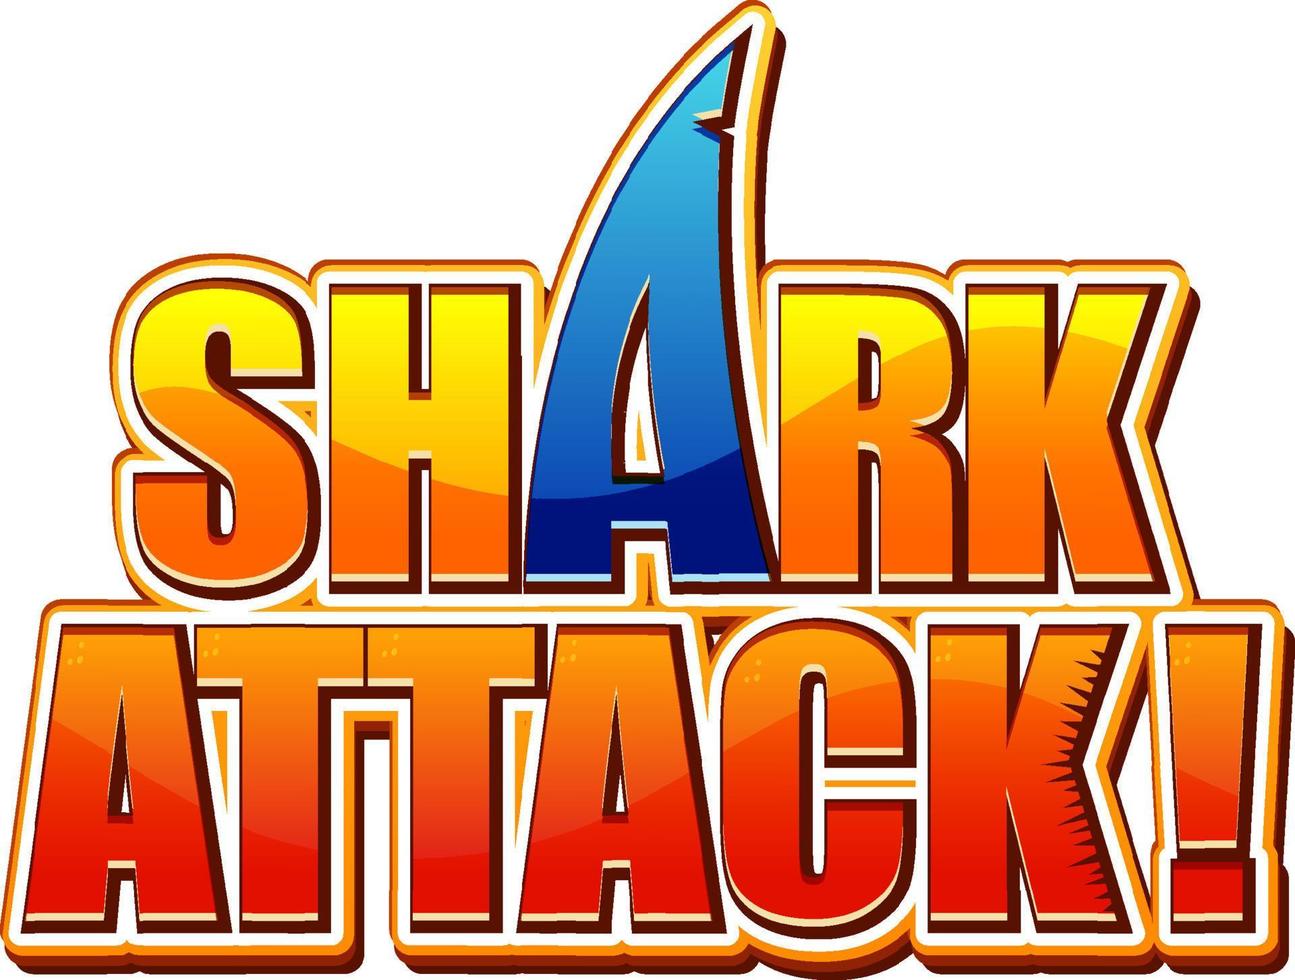 Shark Attack typography design vector